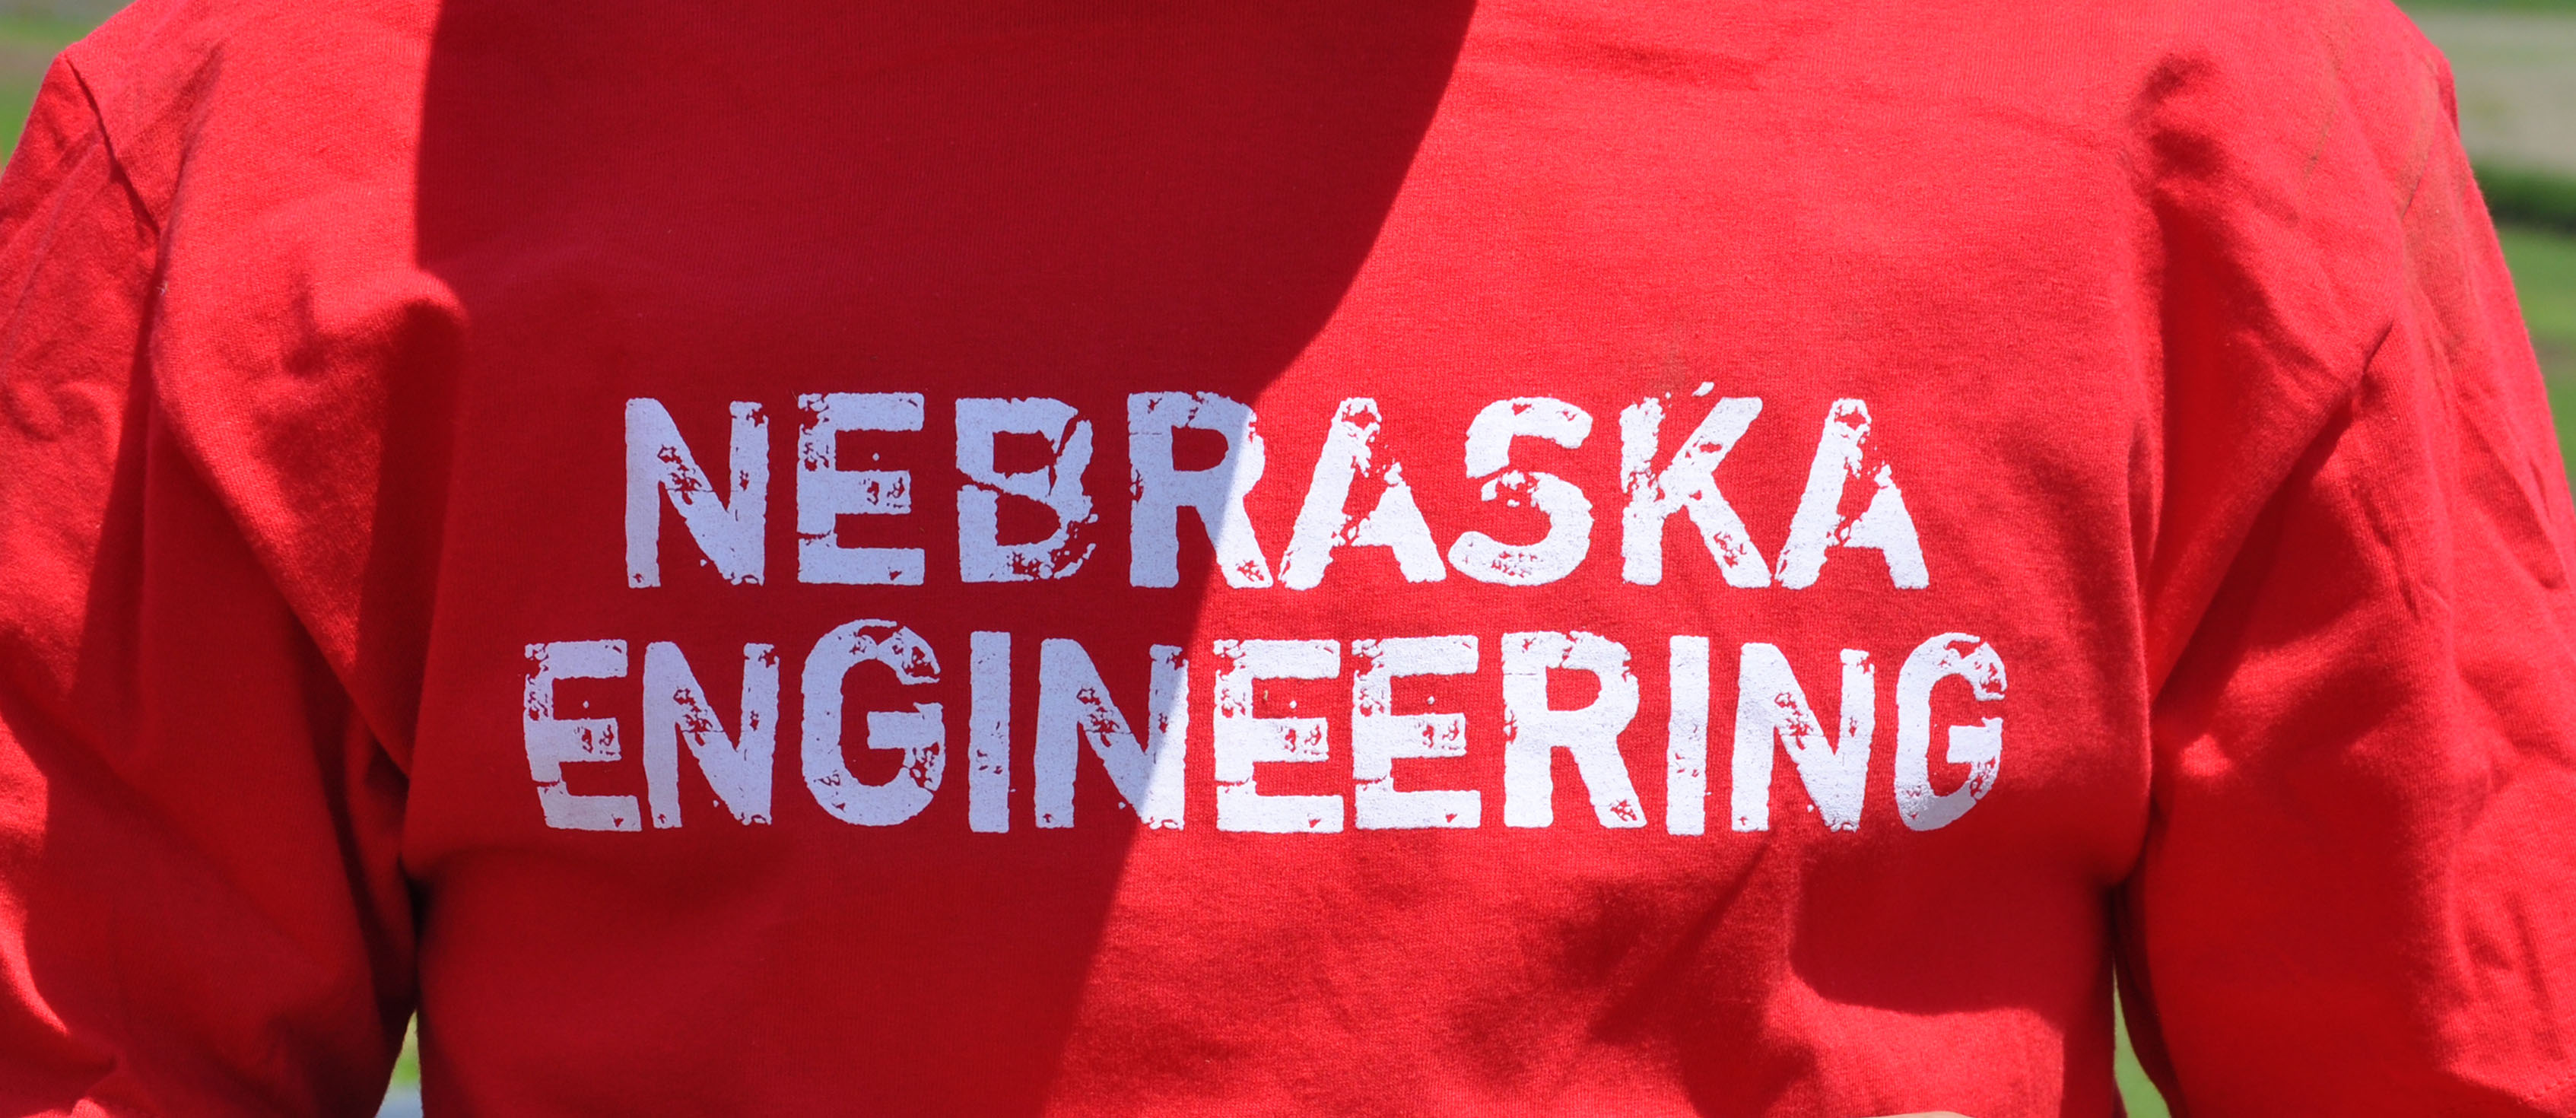 Let's see some Nebraska Engineering students in UNL photos!